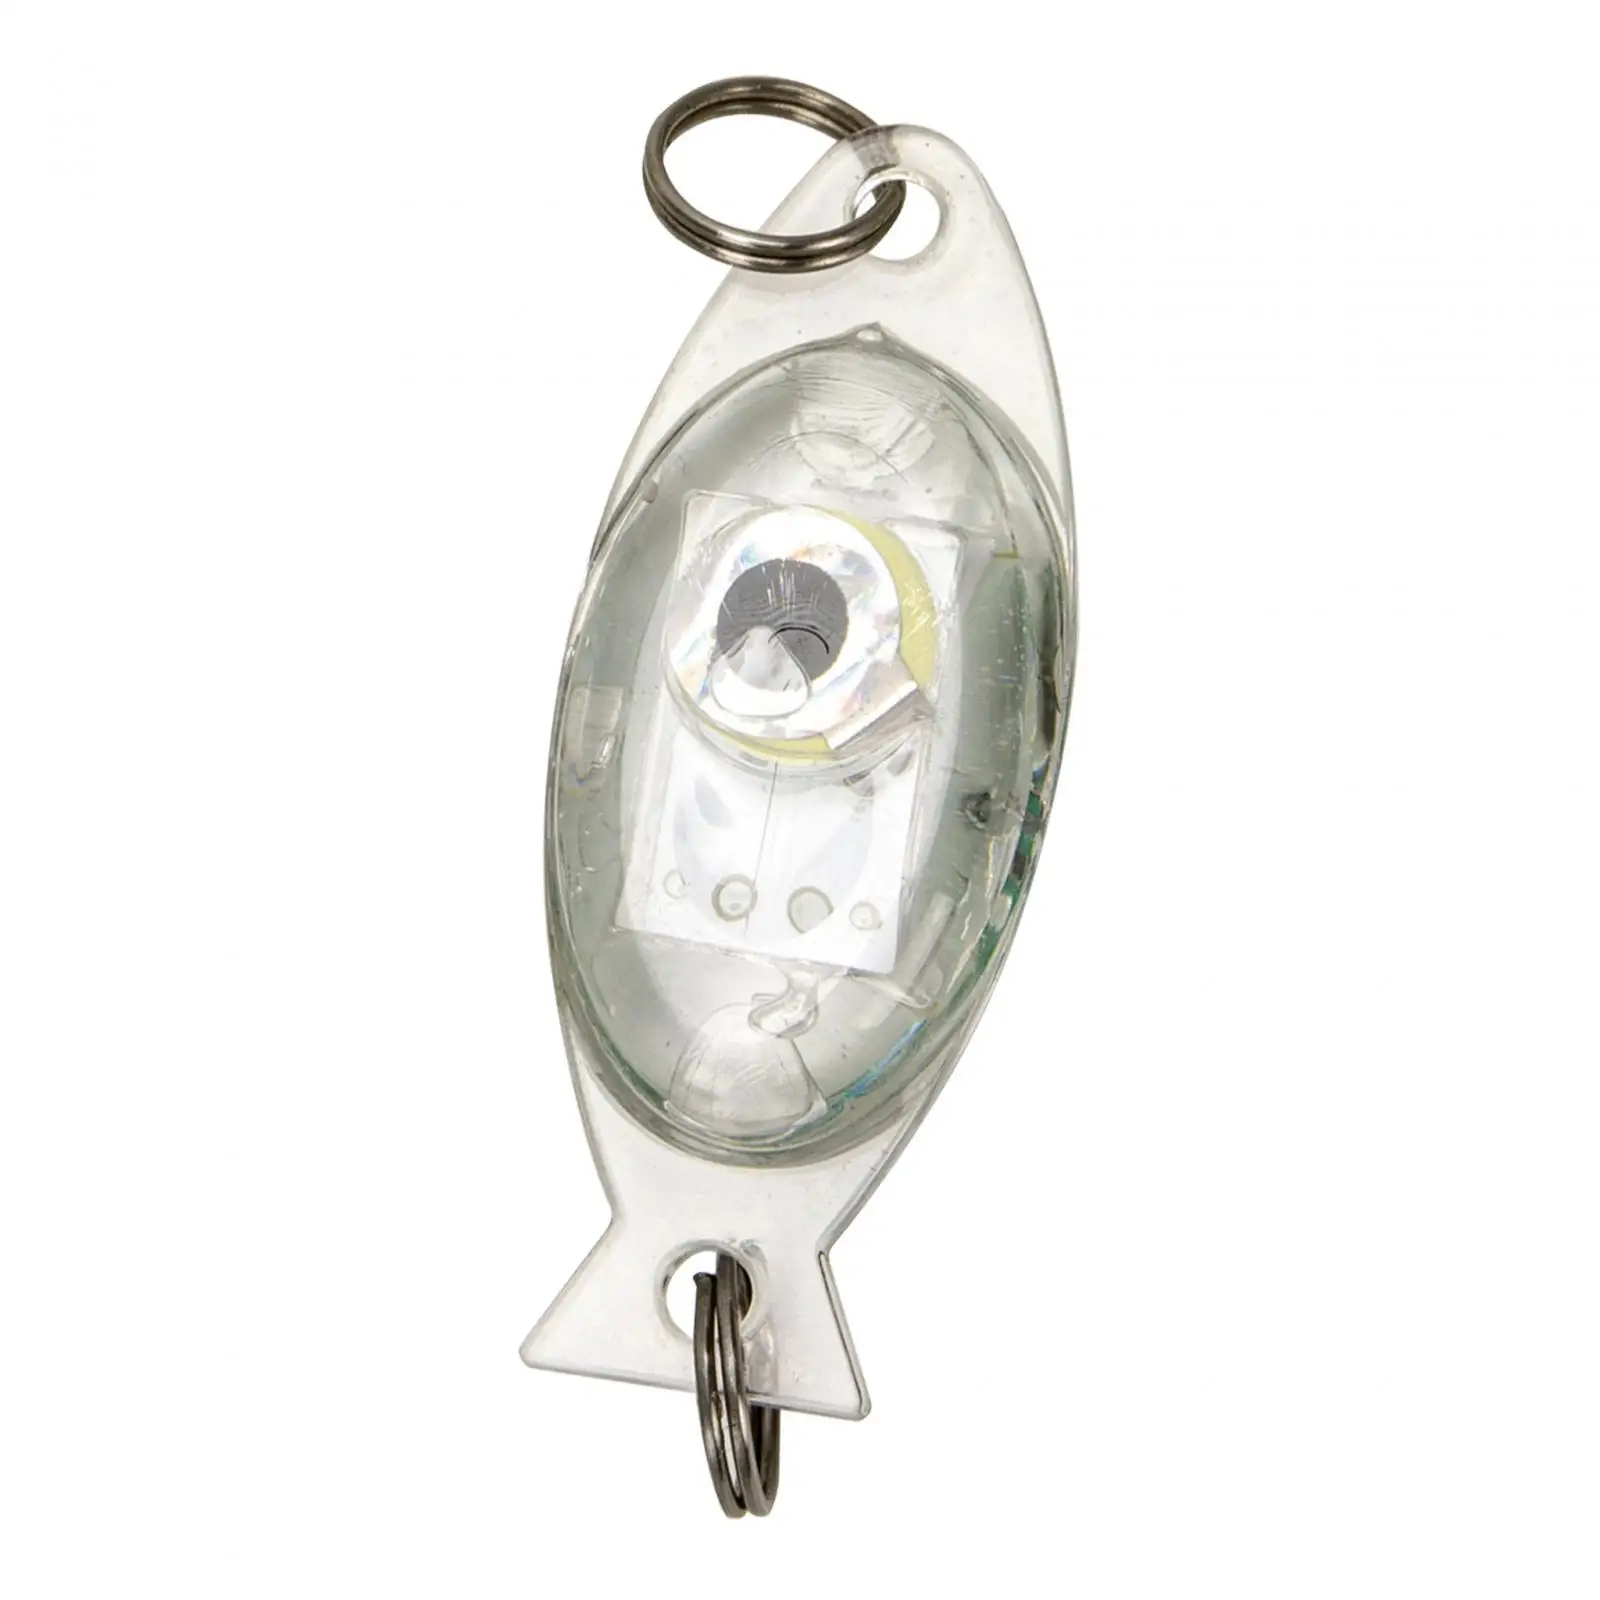 LED Fishing Light Attracting Fish Small Multifunctional Light